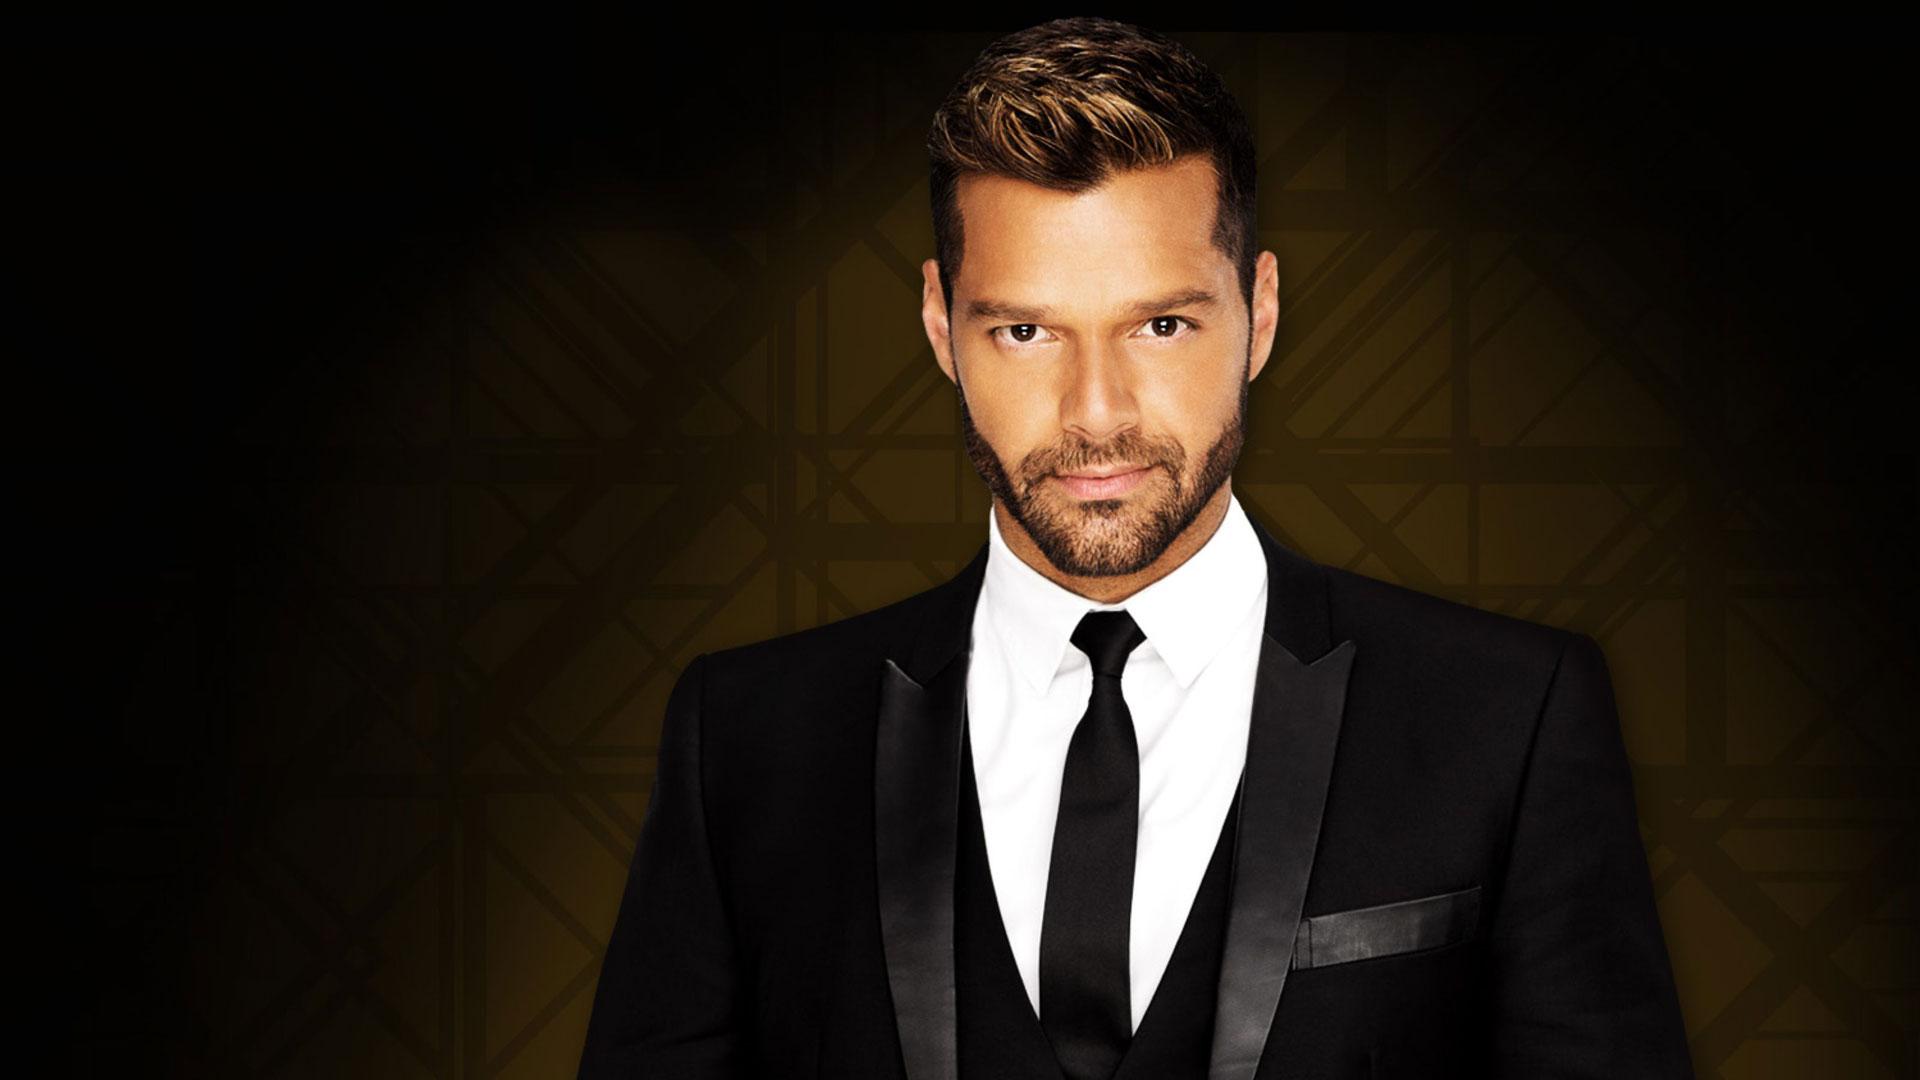 Emiten orden de protección contra Ricky Martin por violencia doméstica